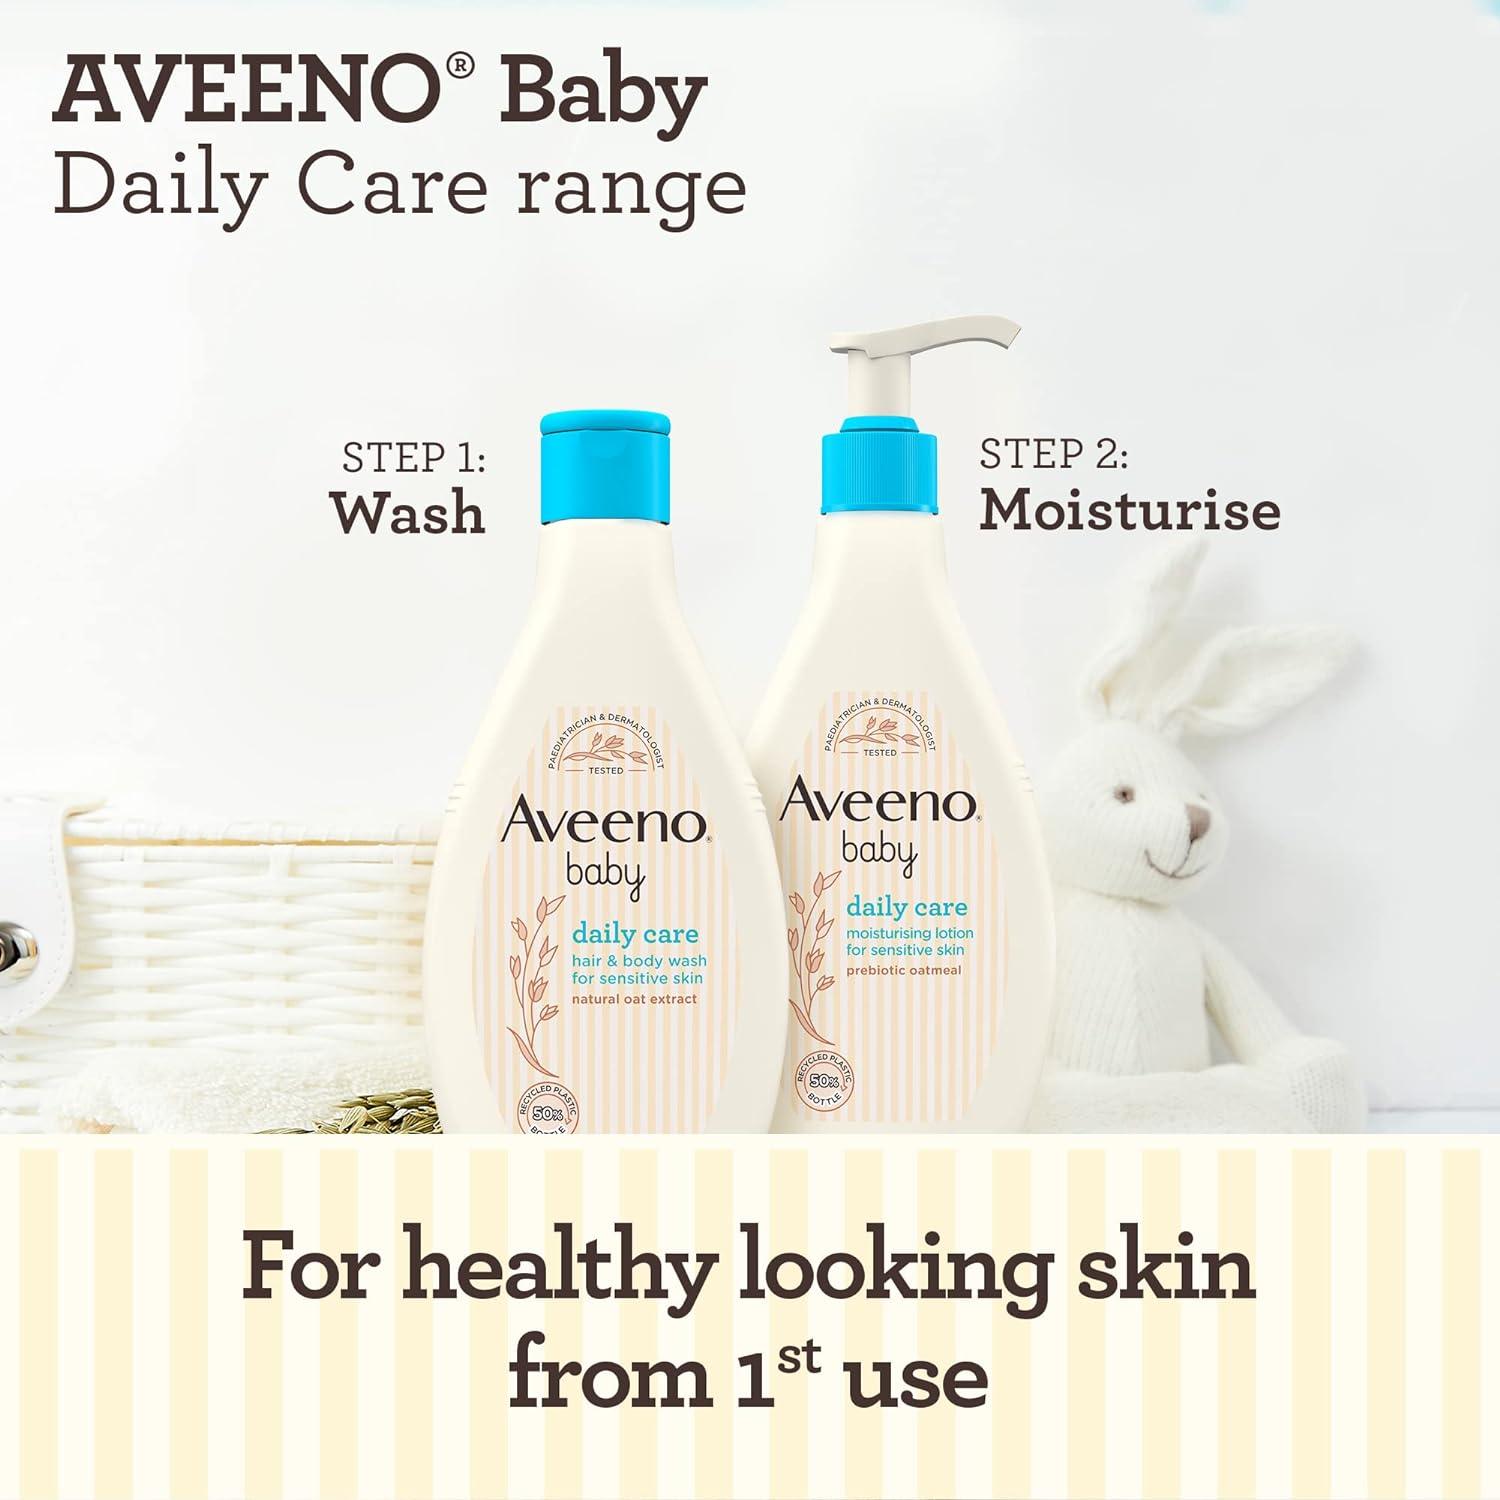 Aveeno Baby Daily Care Hair And Body Wash, 250ml - Wellness Shoppee